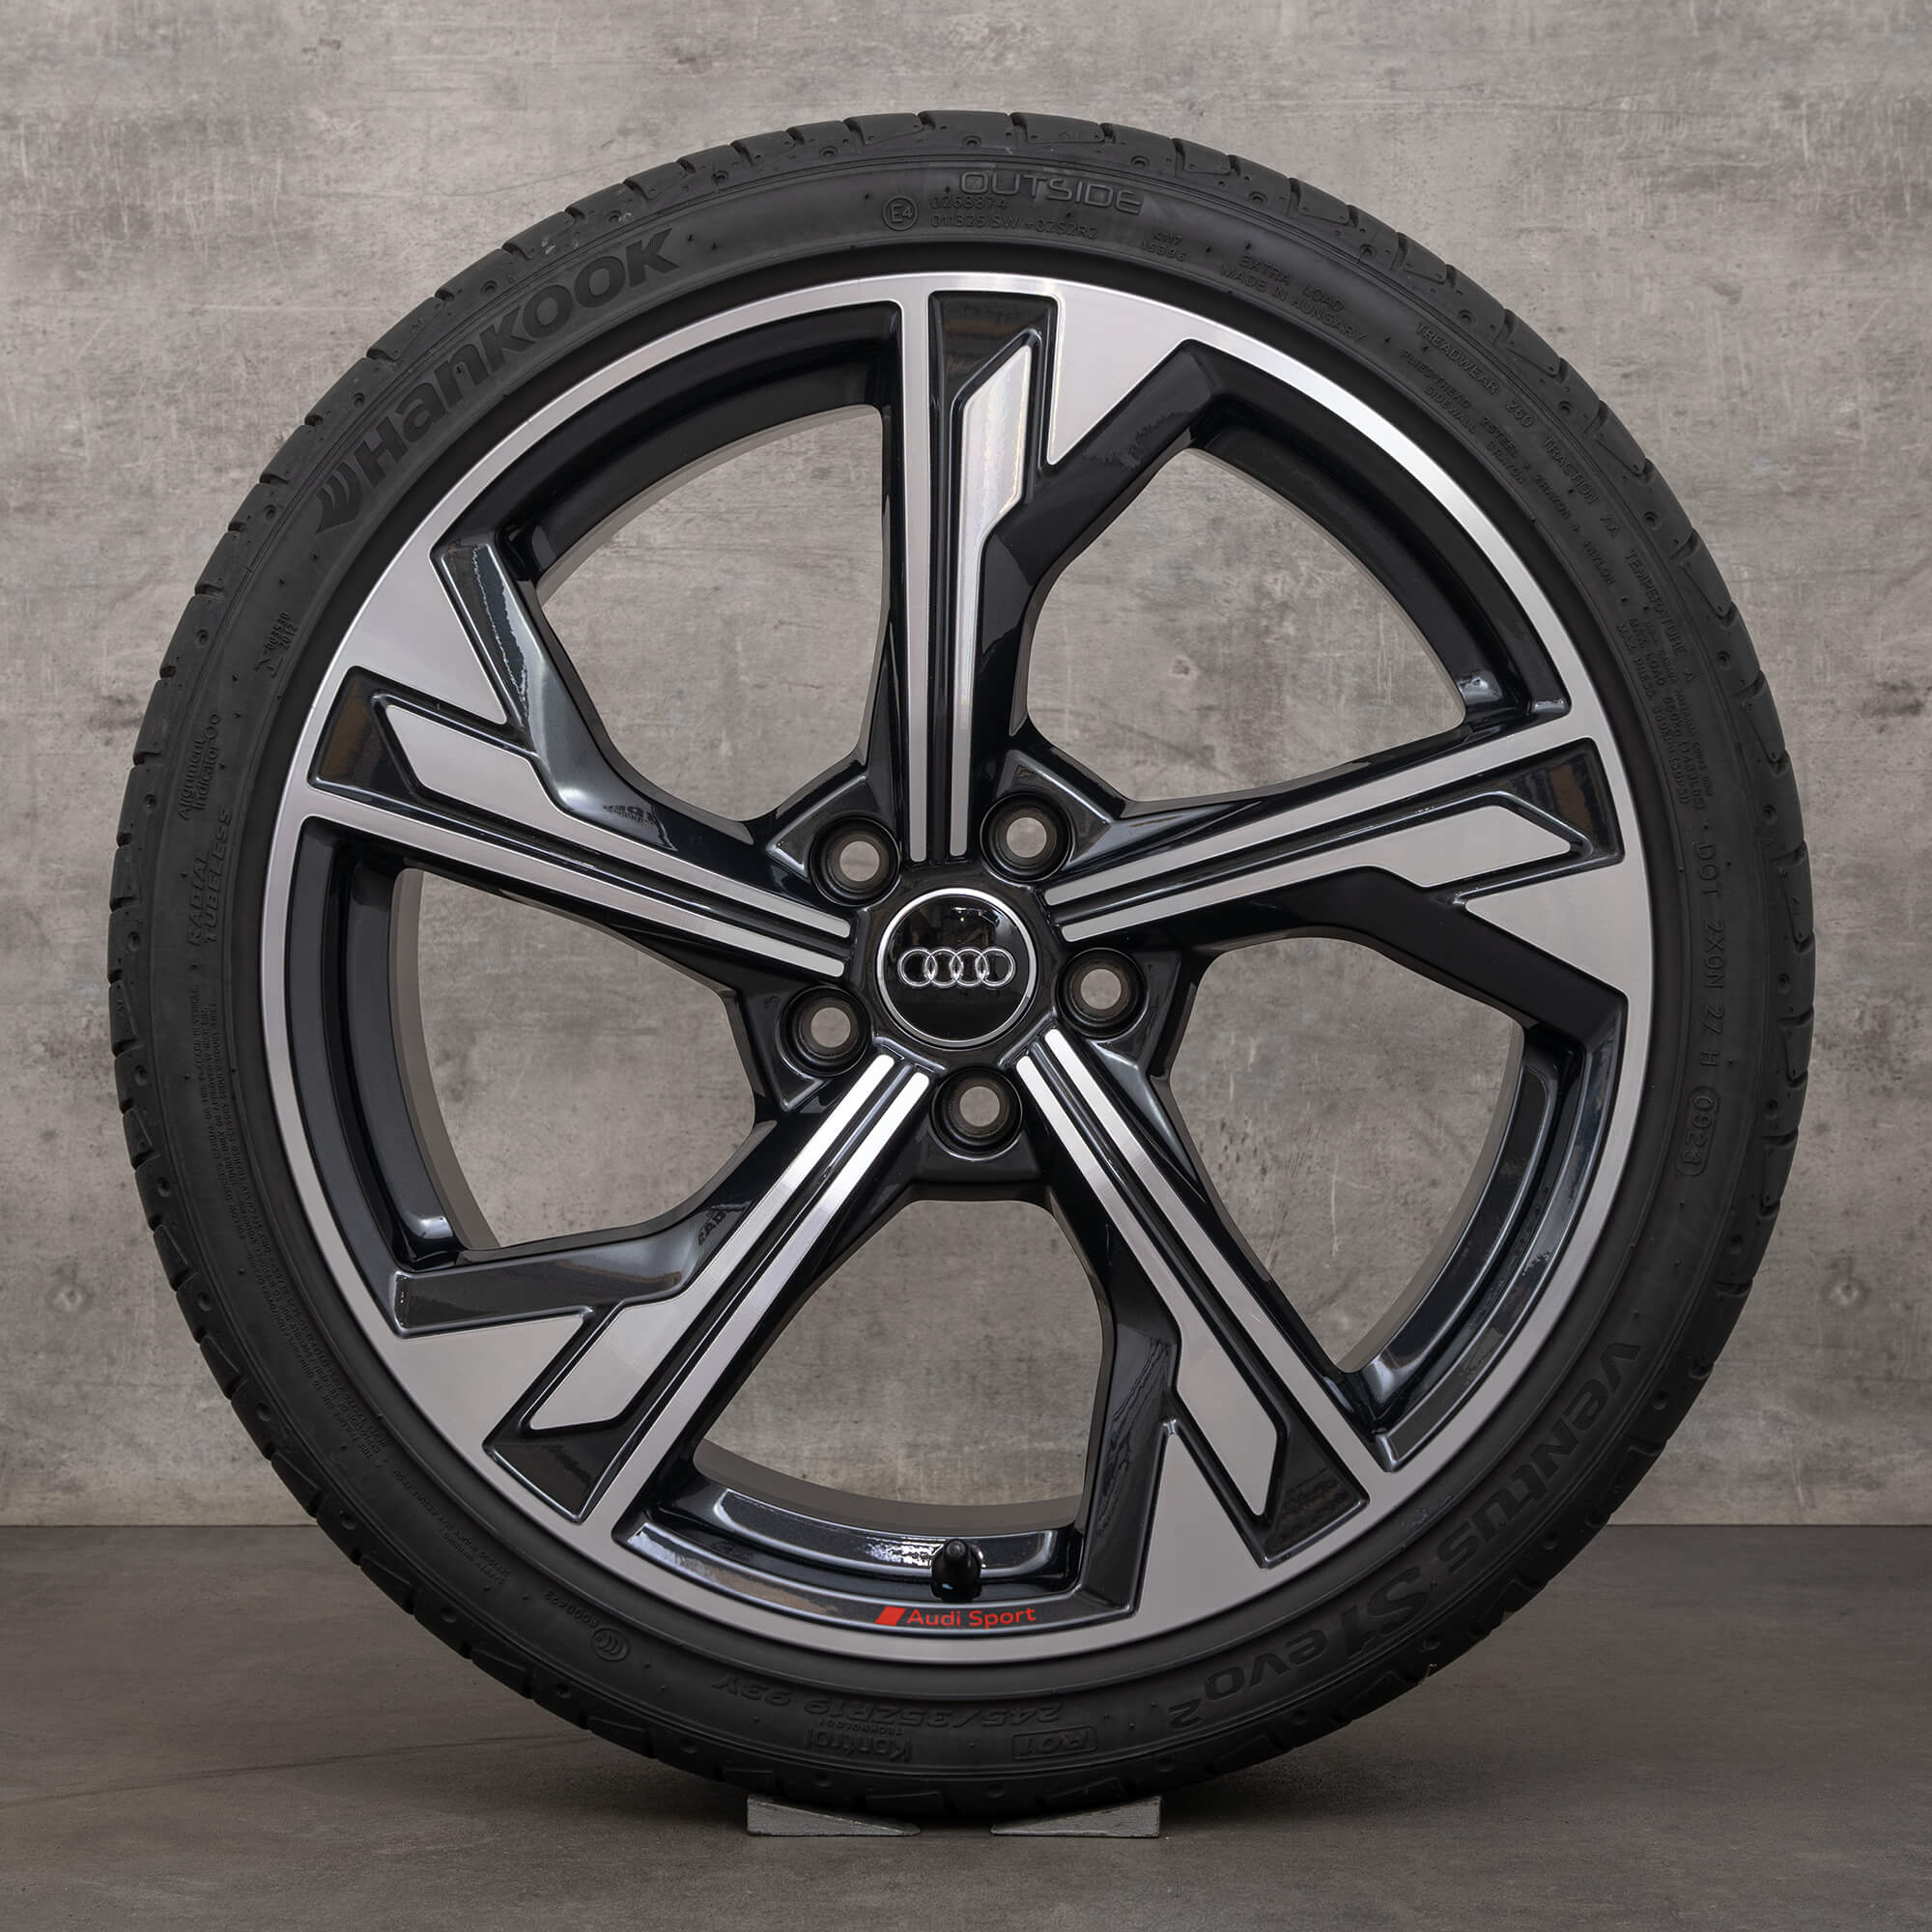 Audi A4 S4 B9 ruote estive pneumatici estivi cerchi in alluminio da 19 pollici